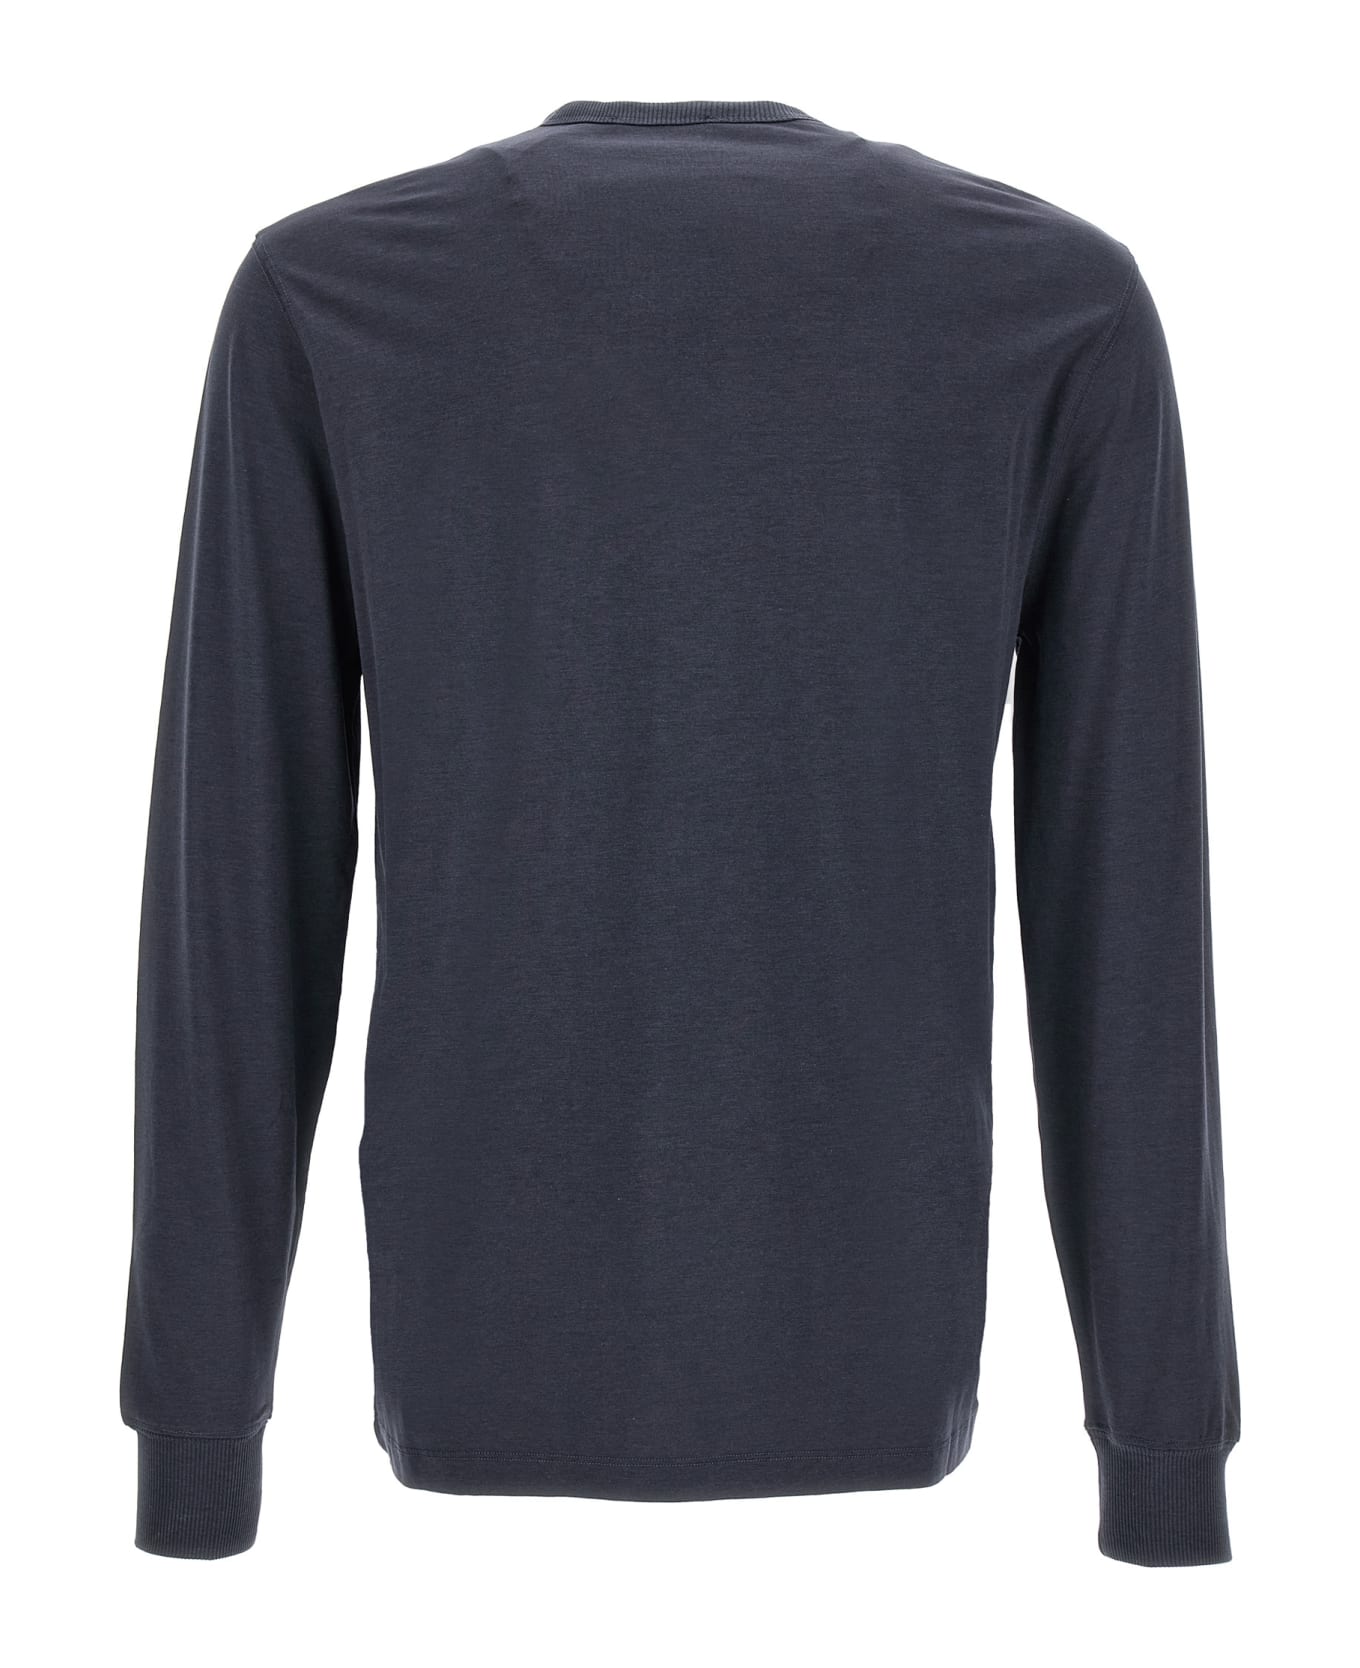 Tom Ford Serafino Sweater - Blue シャツ